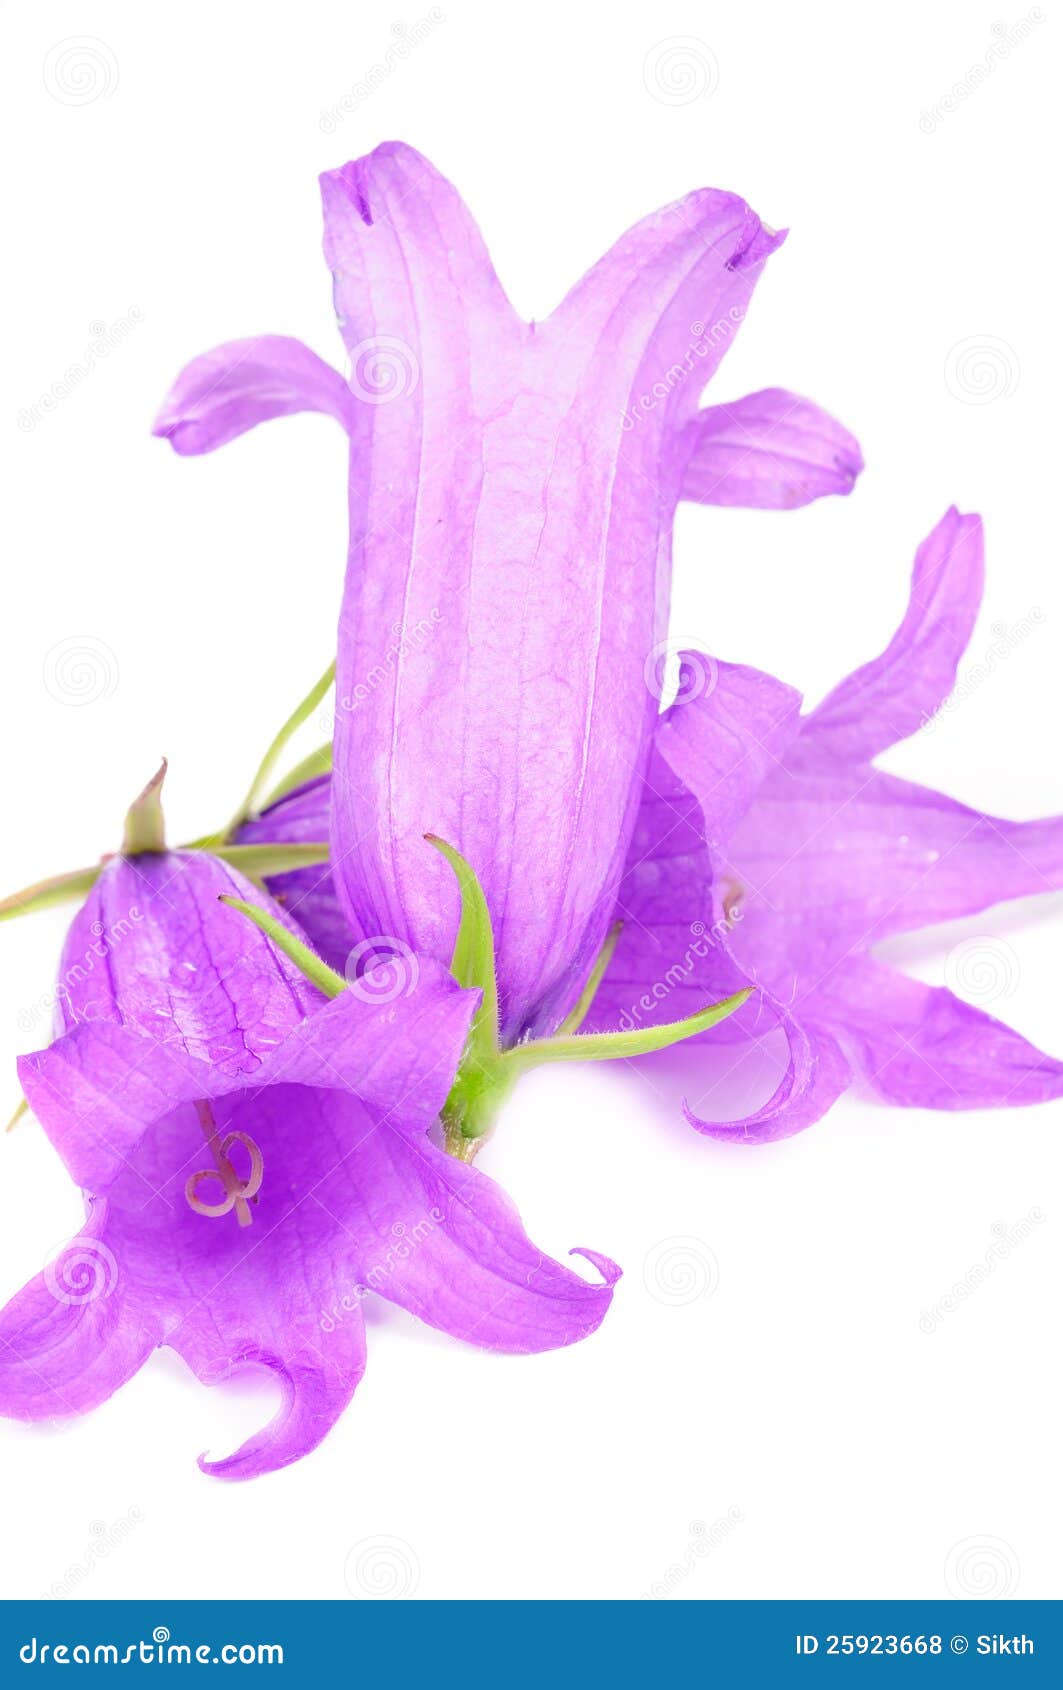 purple flowers of giant bellflower